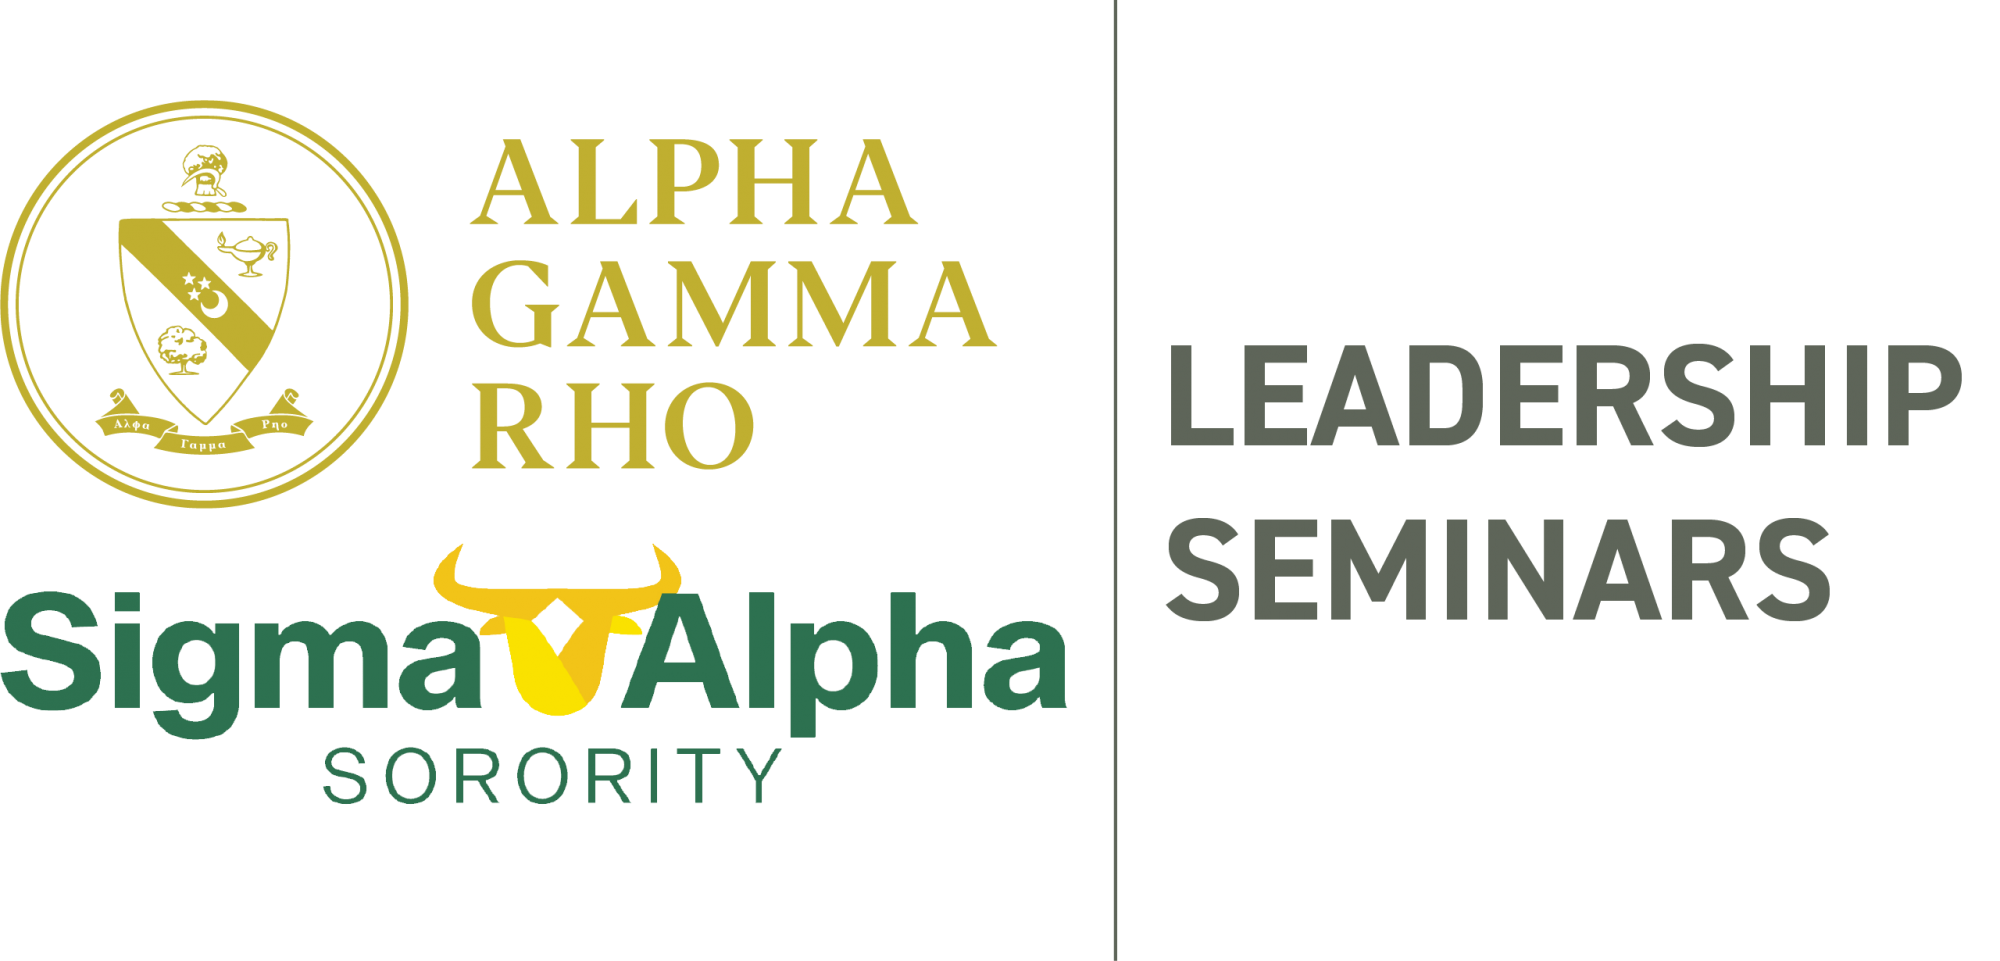 Alpha gamma Rho Leadership Seminar graphic